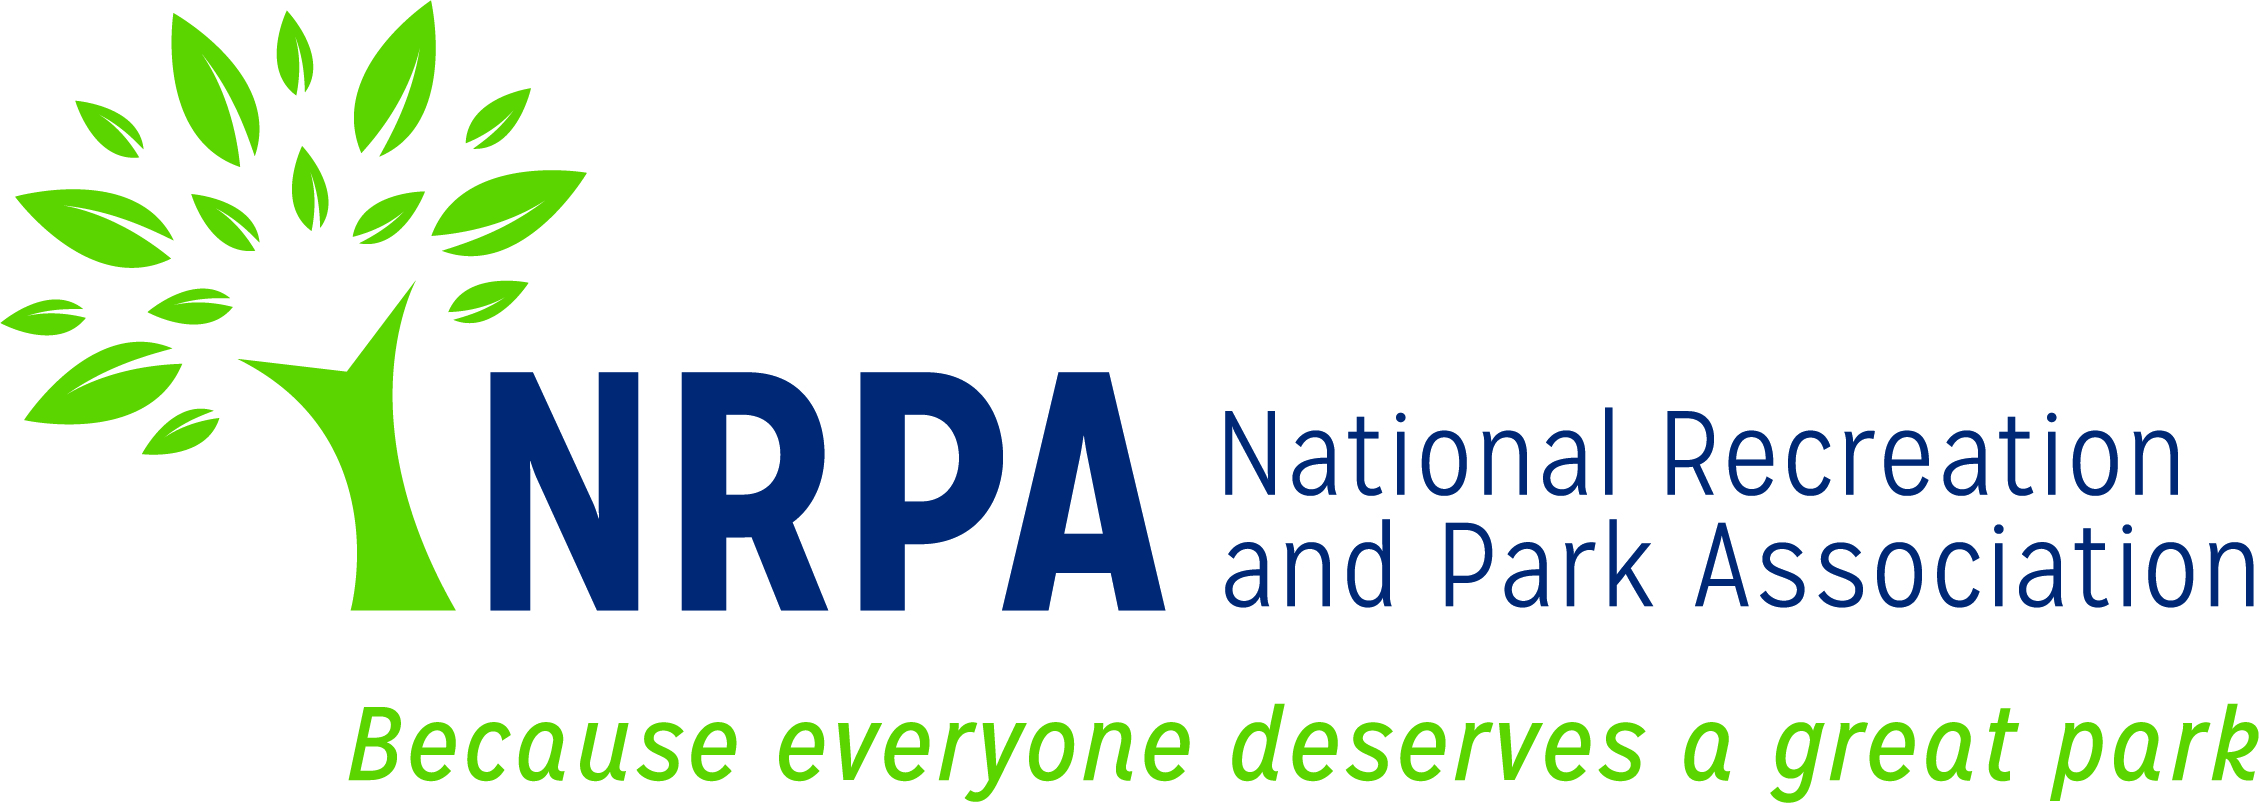 NRPA Awards $575,000